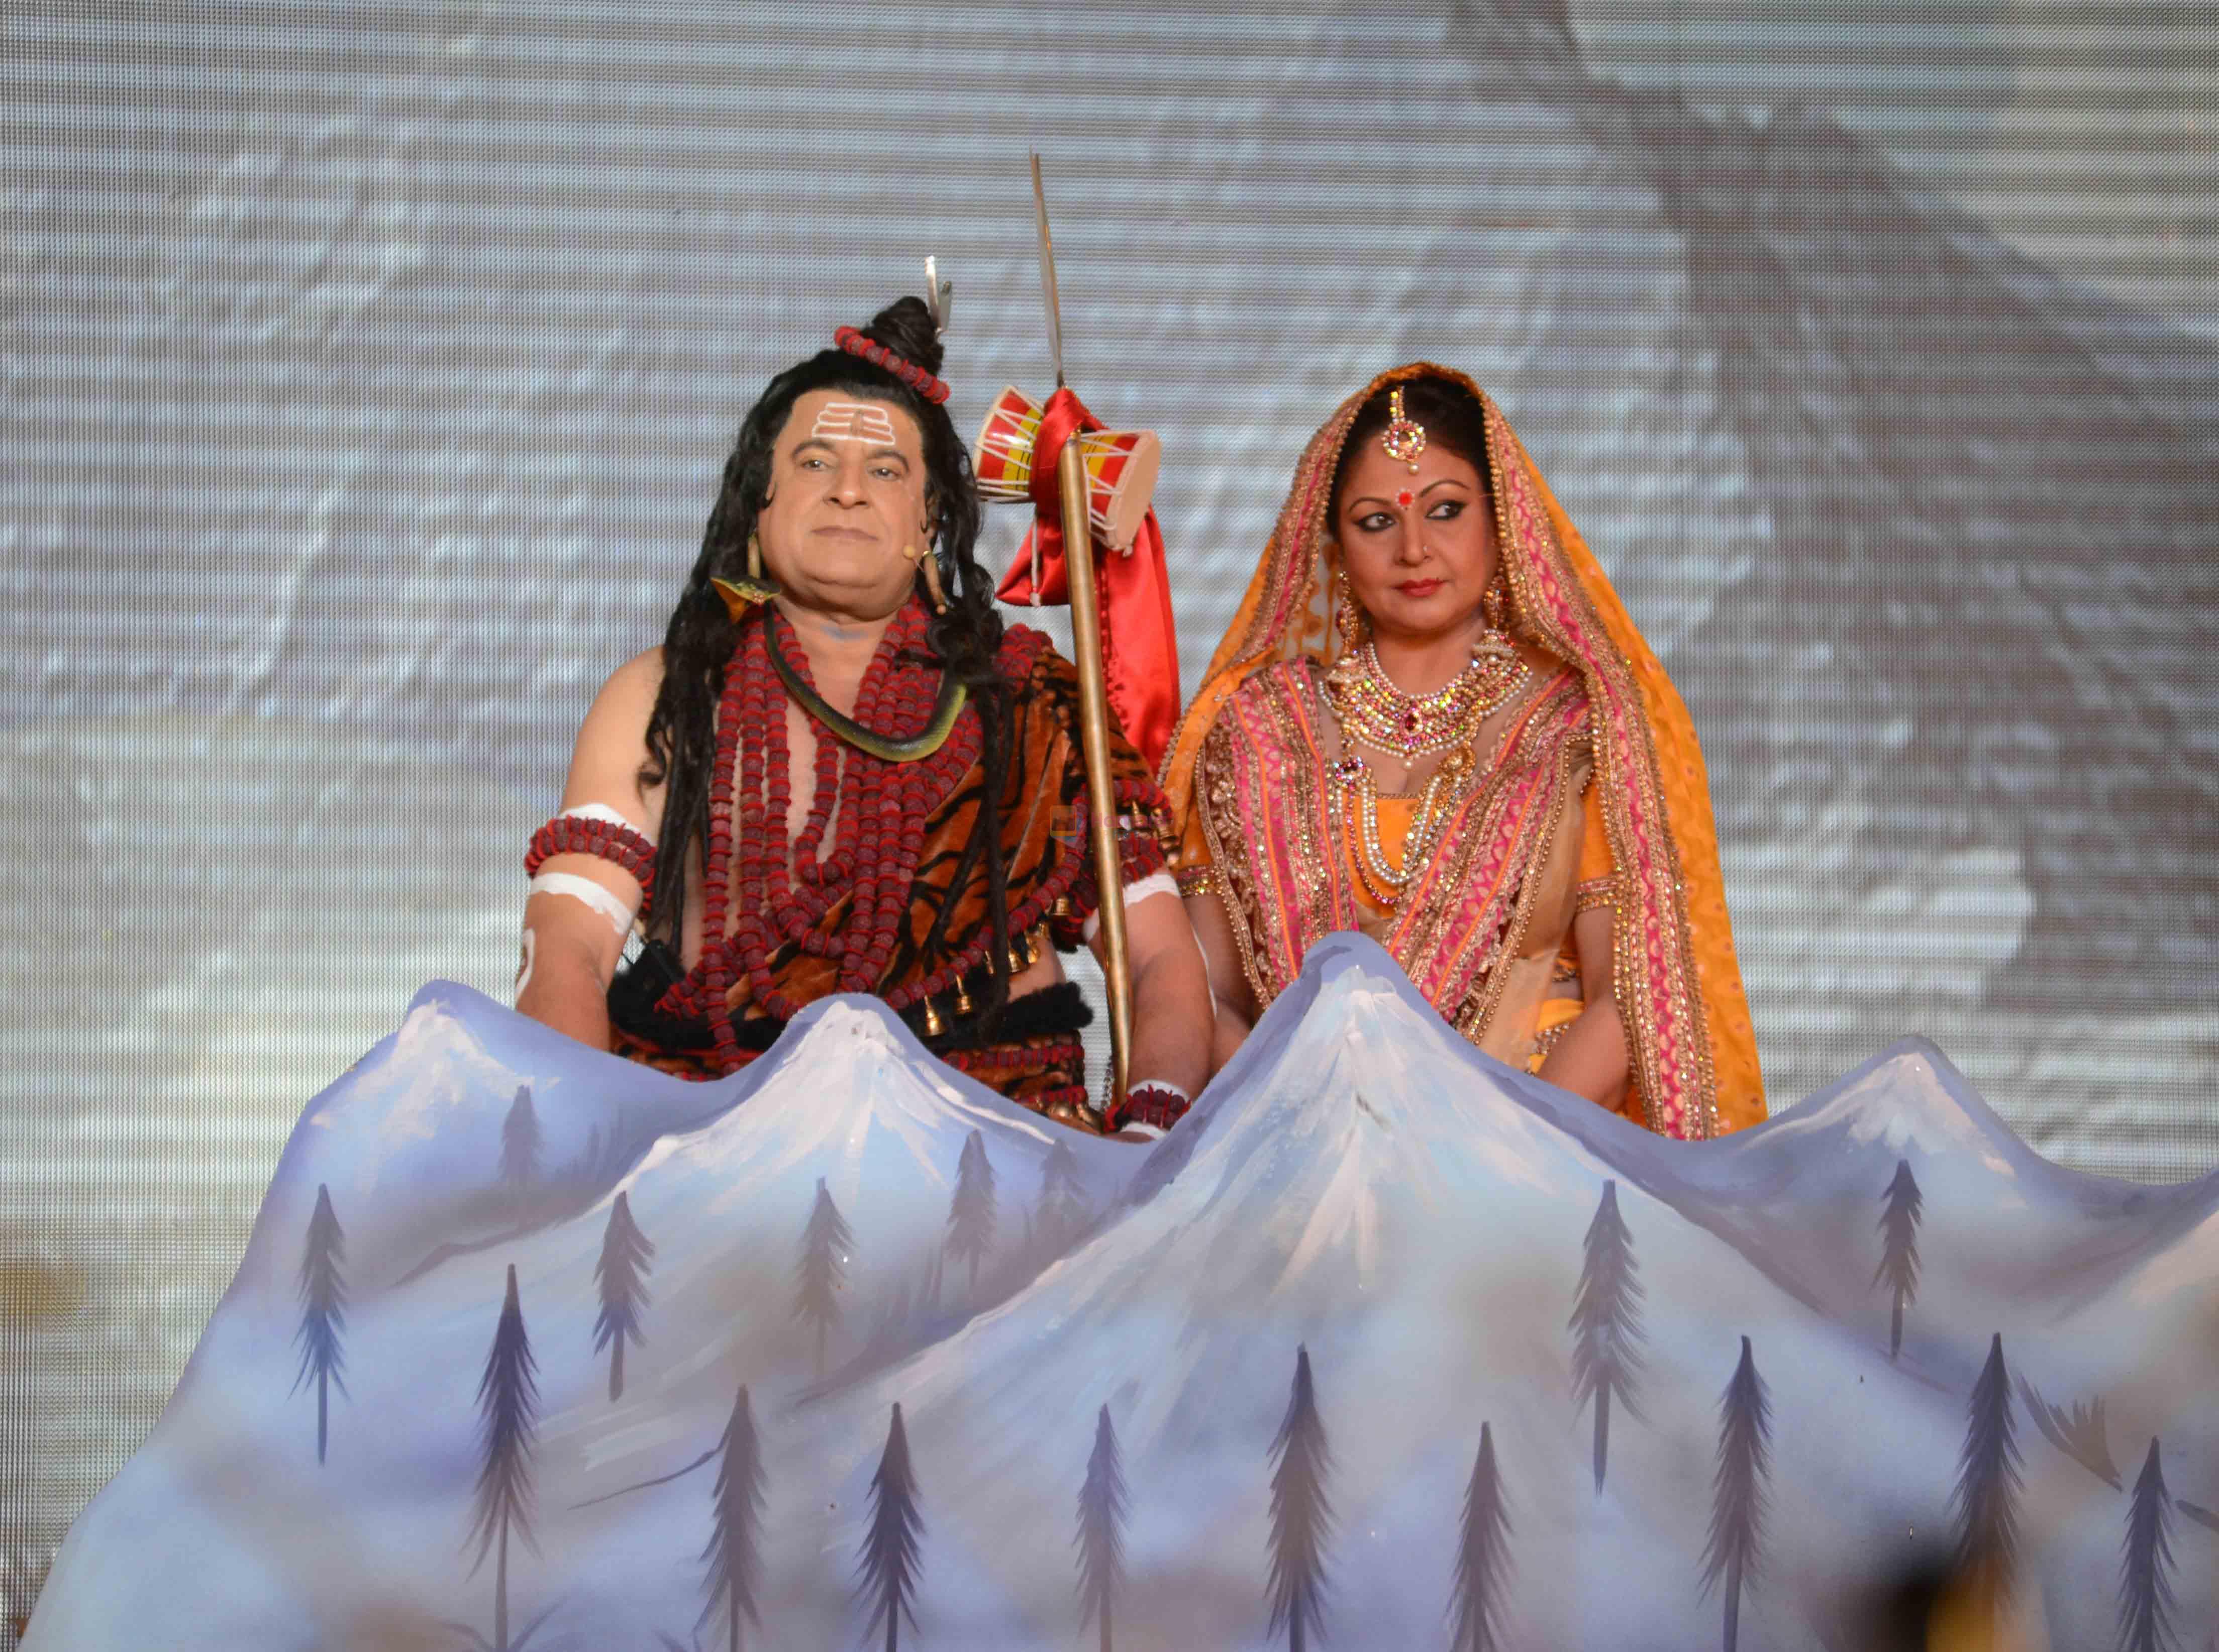 Gajender Singh & Rati Agnihotri- Shiv Parwati Playing the Ram leela at Luv Kush ram Leela committee at Lal Qila maidan in Delhi on 13th Oct 2015